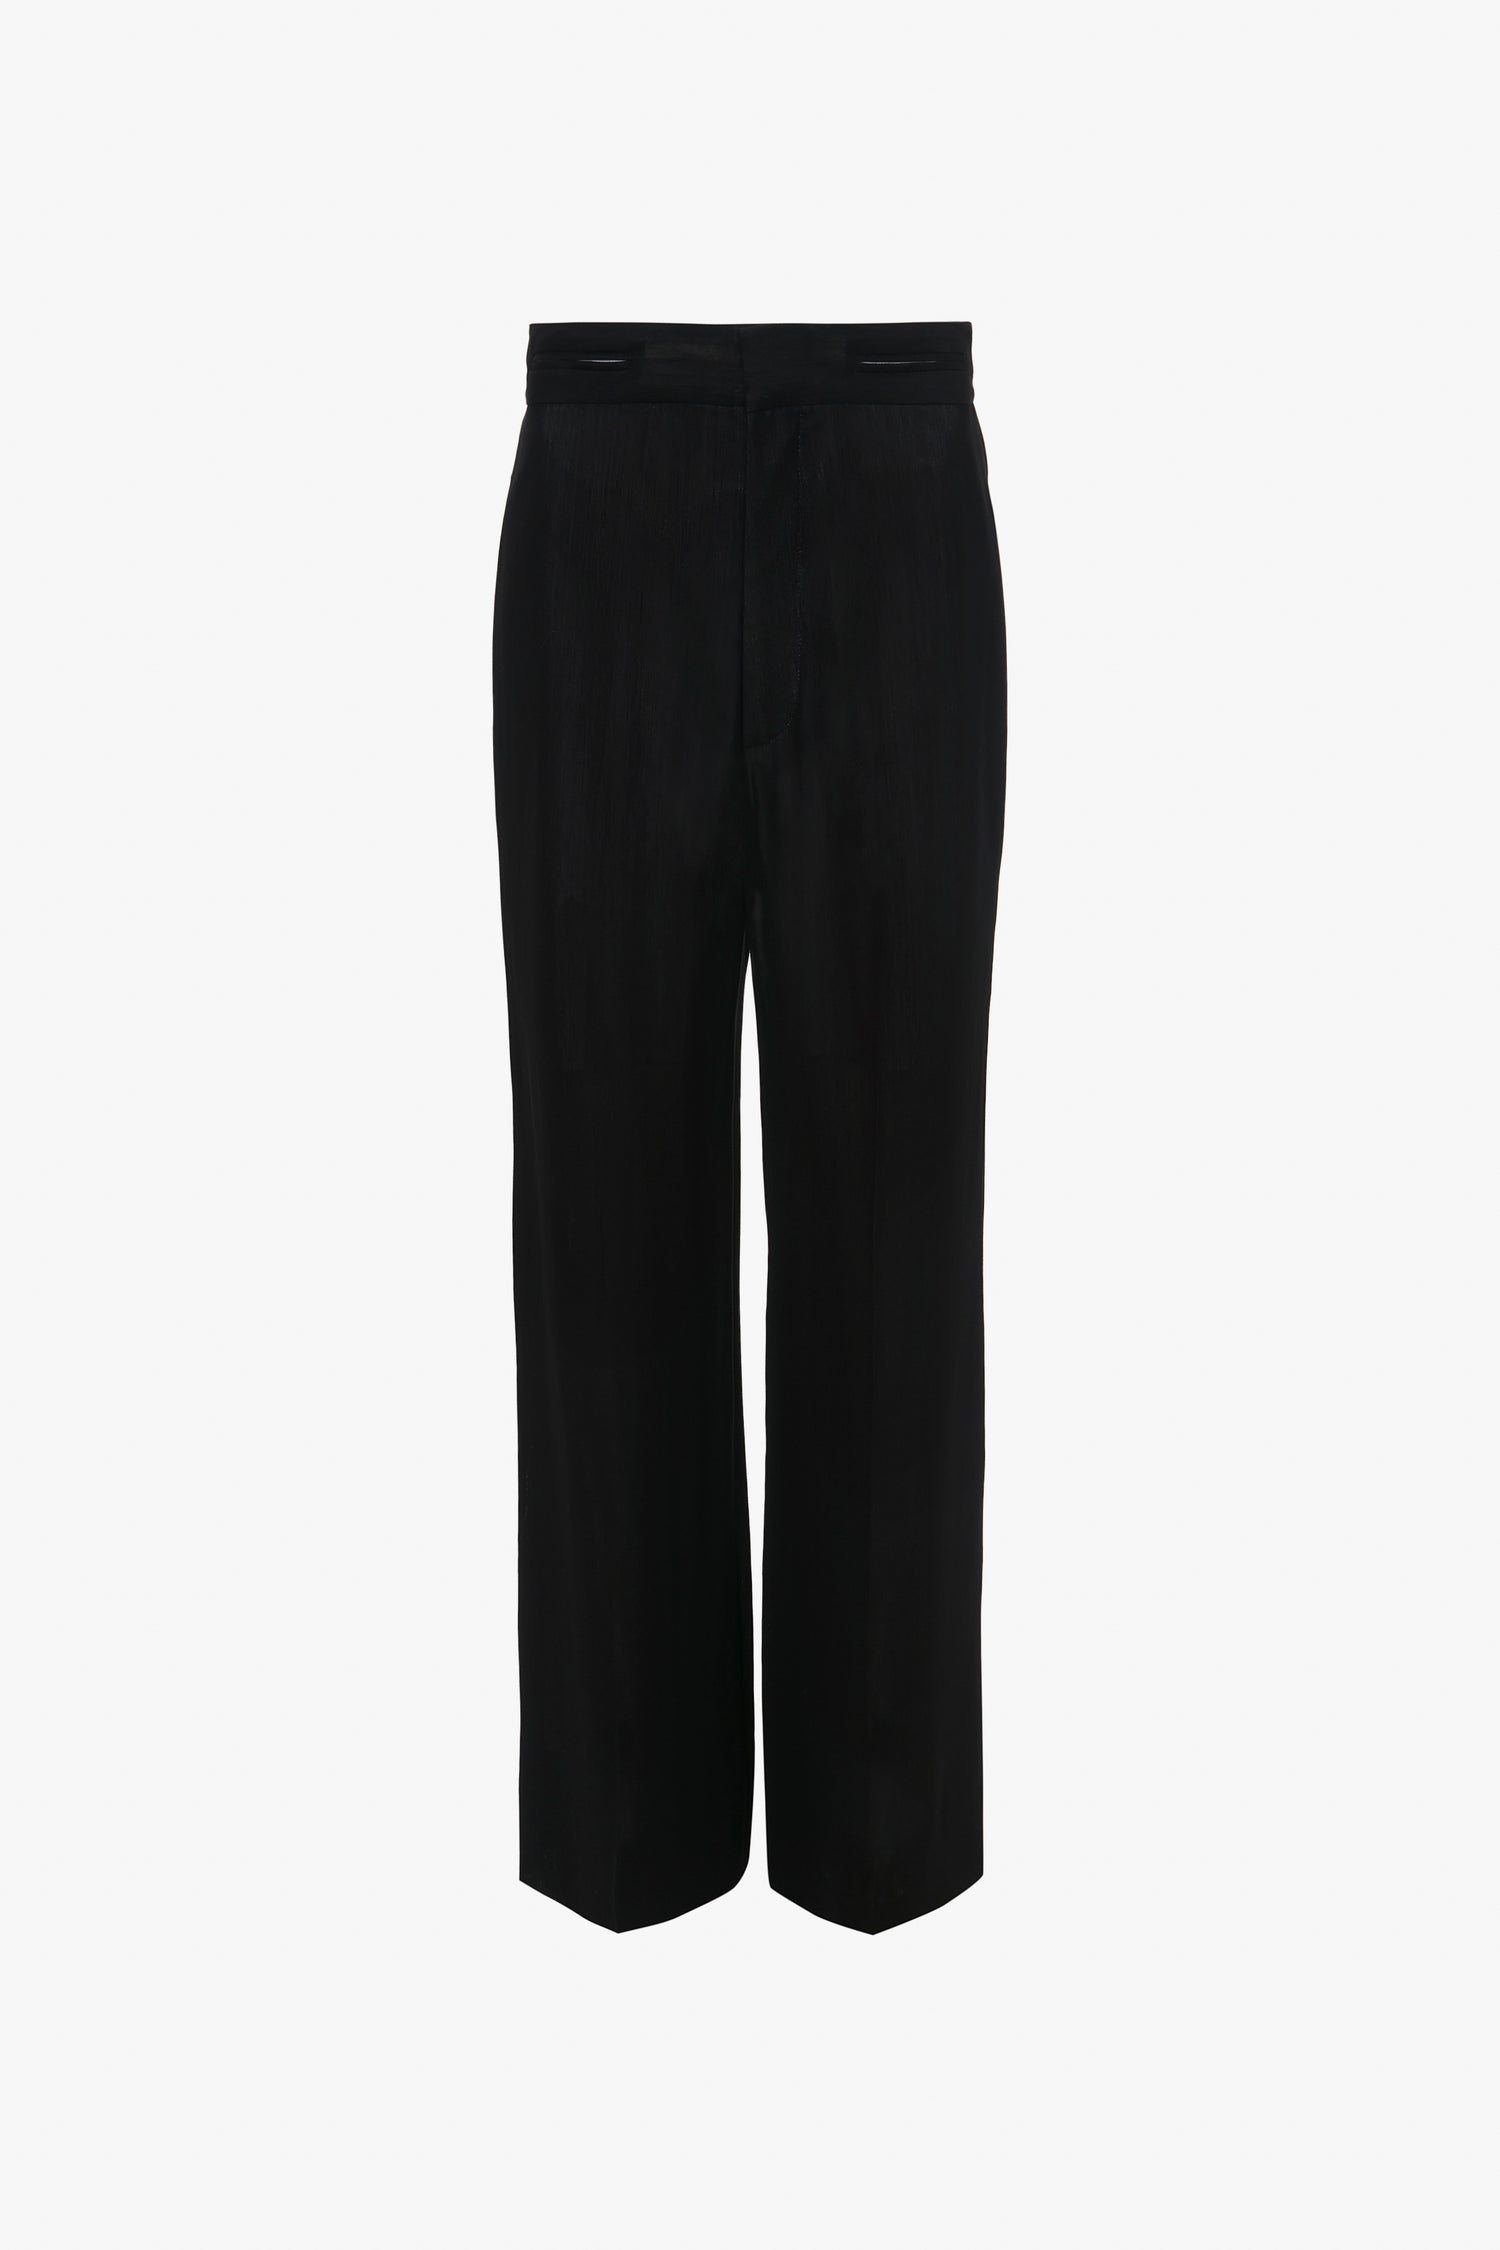 Victoria Beckham's Waistband Detail Straight Leg Trouser In Black on a white background.